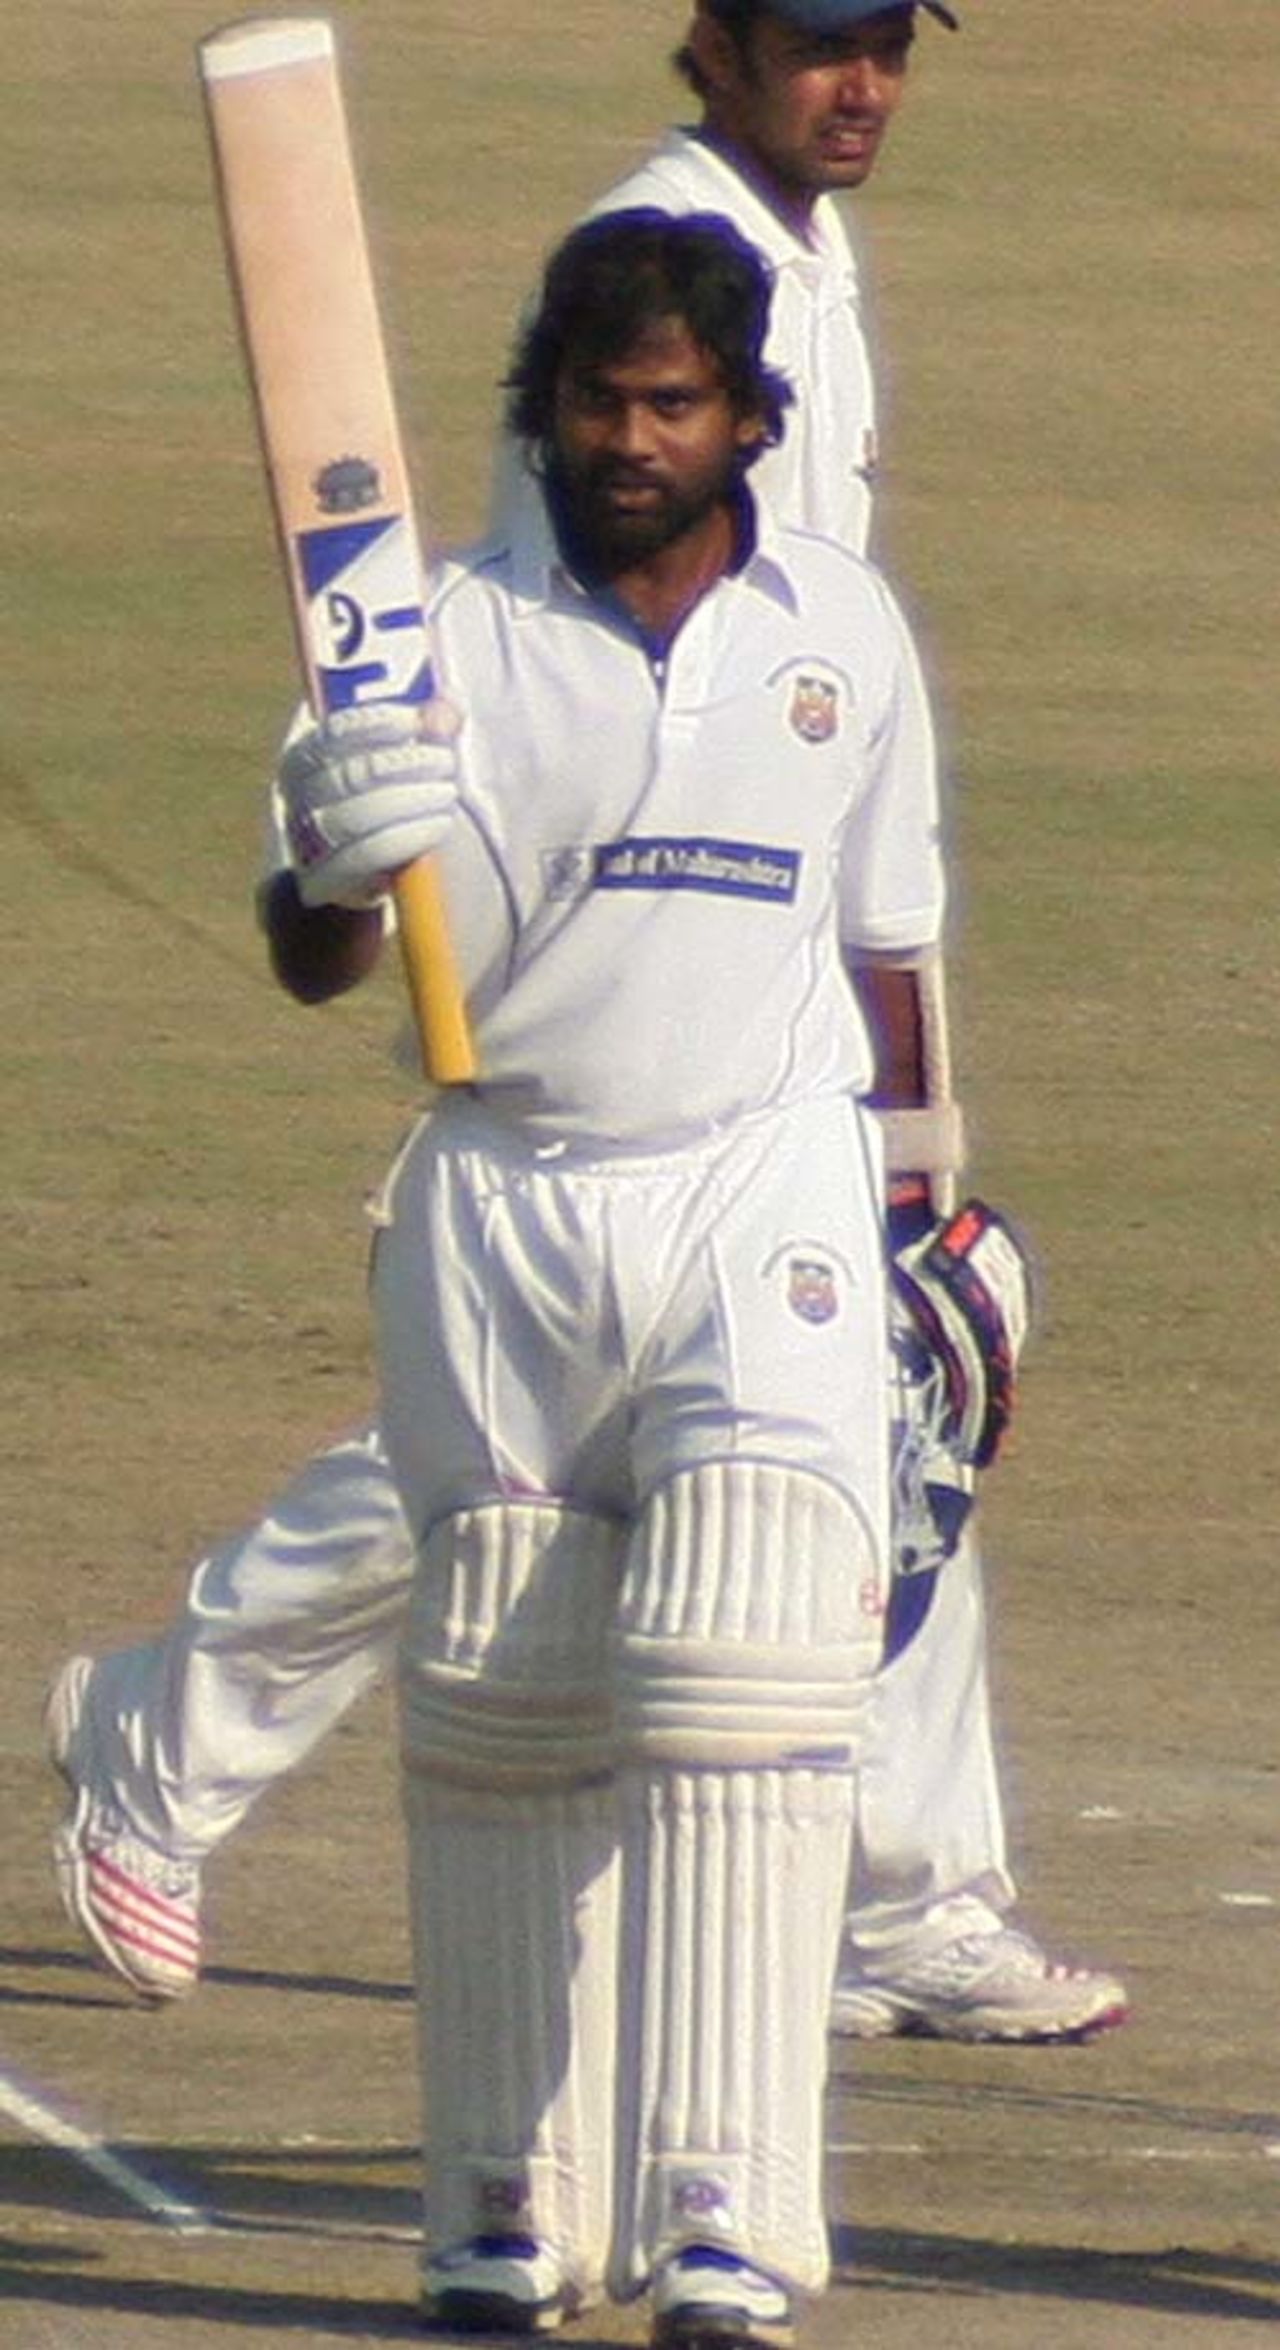 Venugopal Rao raises the bat after reaching his hundred, Himachal Pradesh v Maharashtra, Ranji Trophy Super League, Group A, 3rd round, Dharamsala, 2nd day, November 24, 2007 

